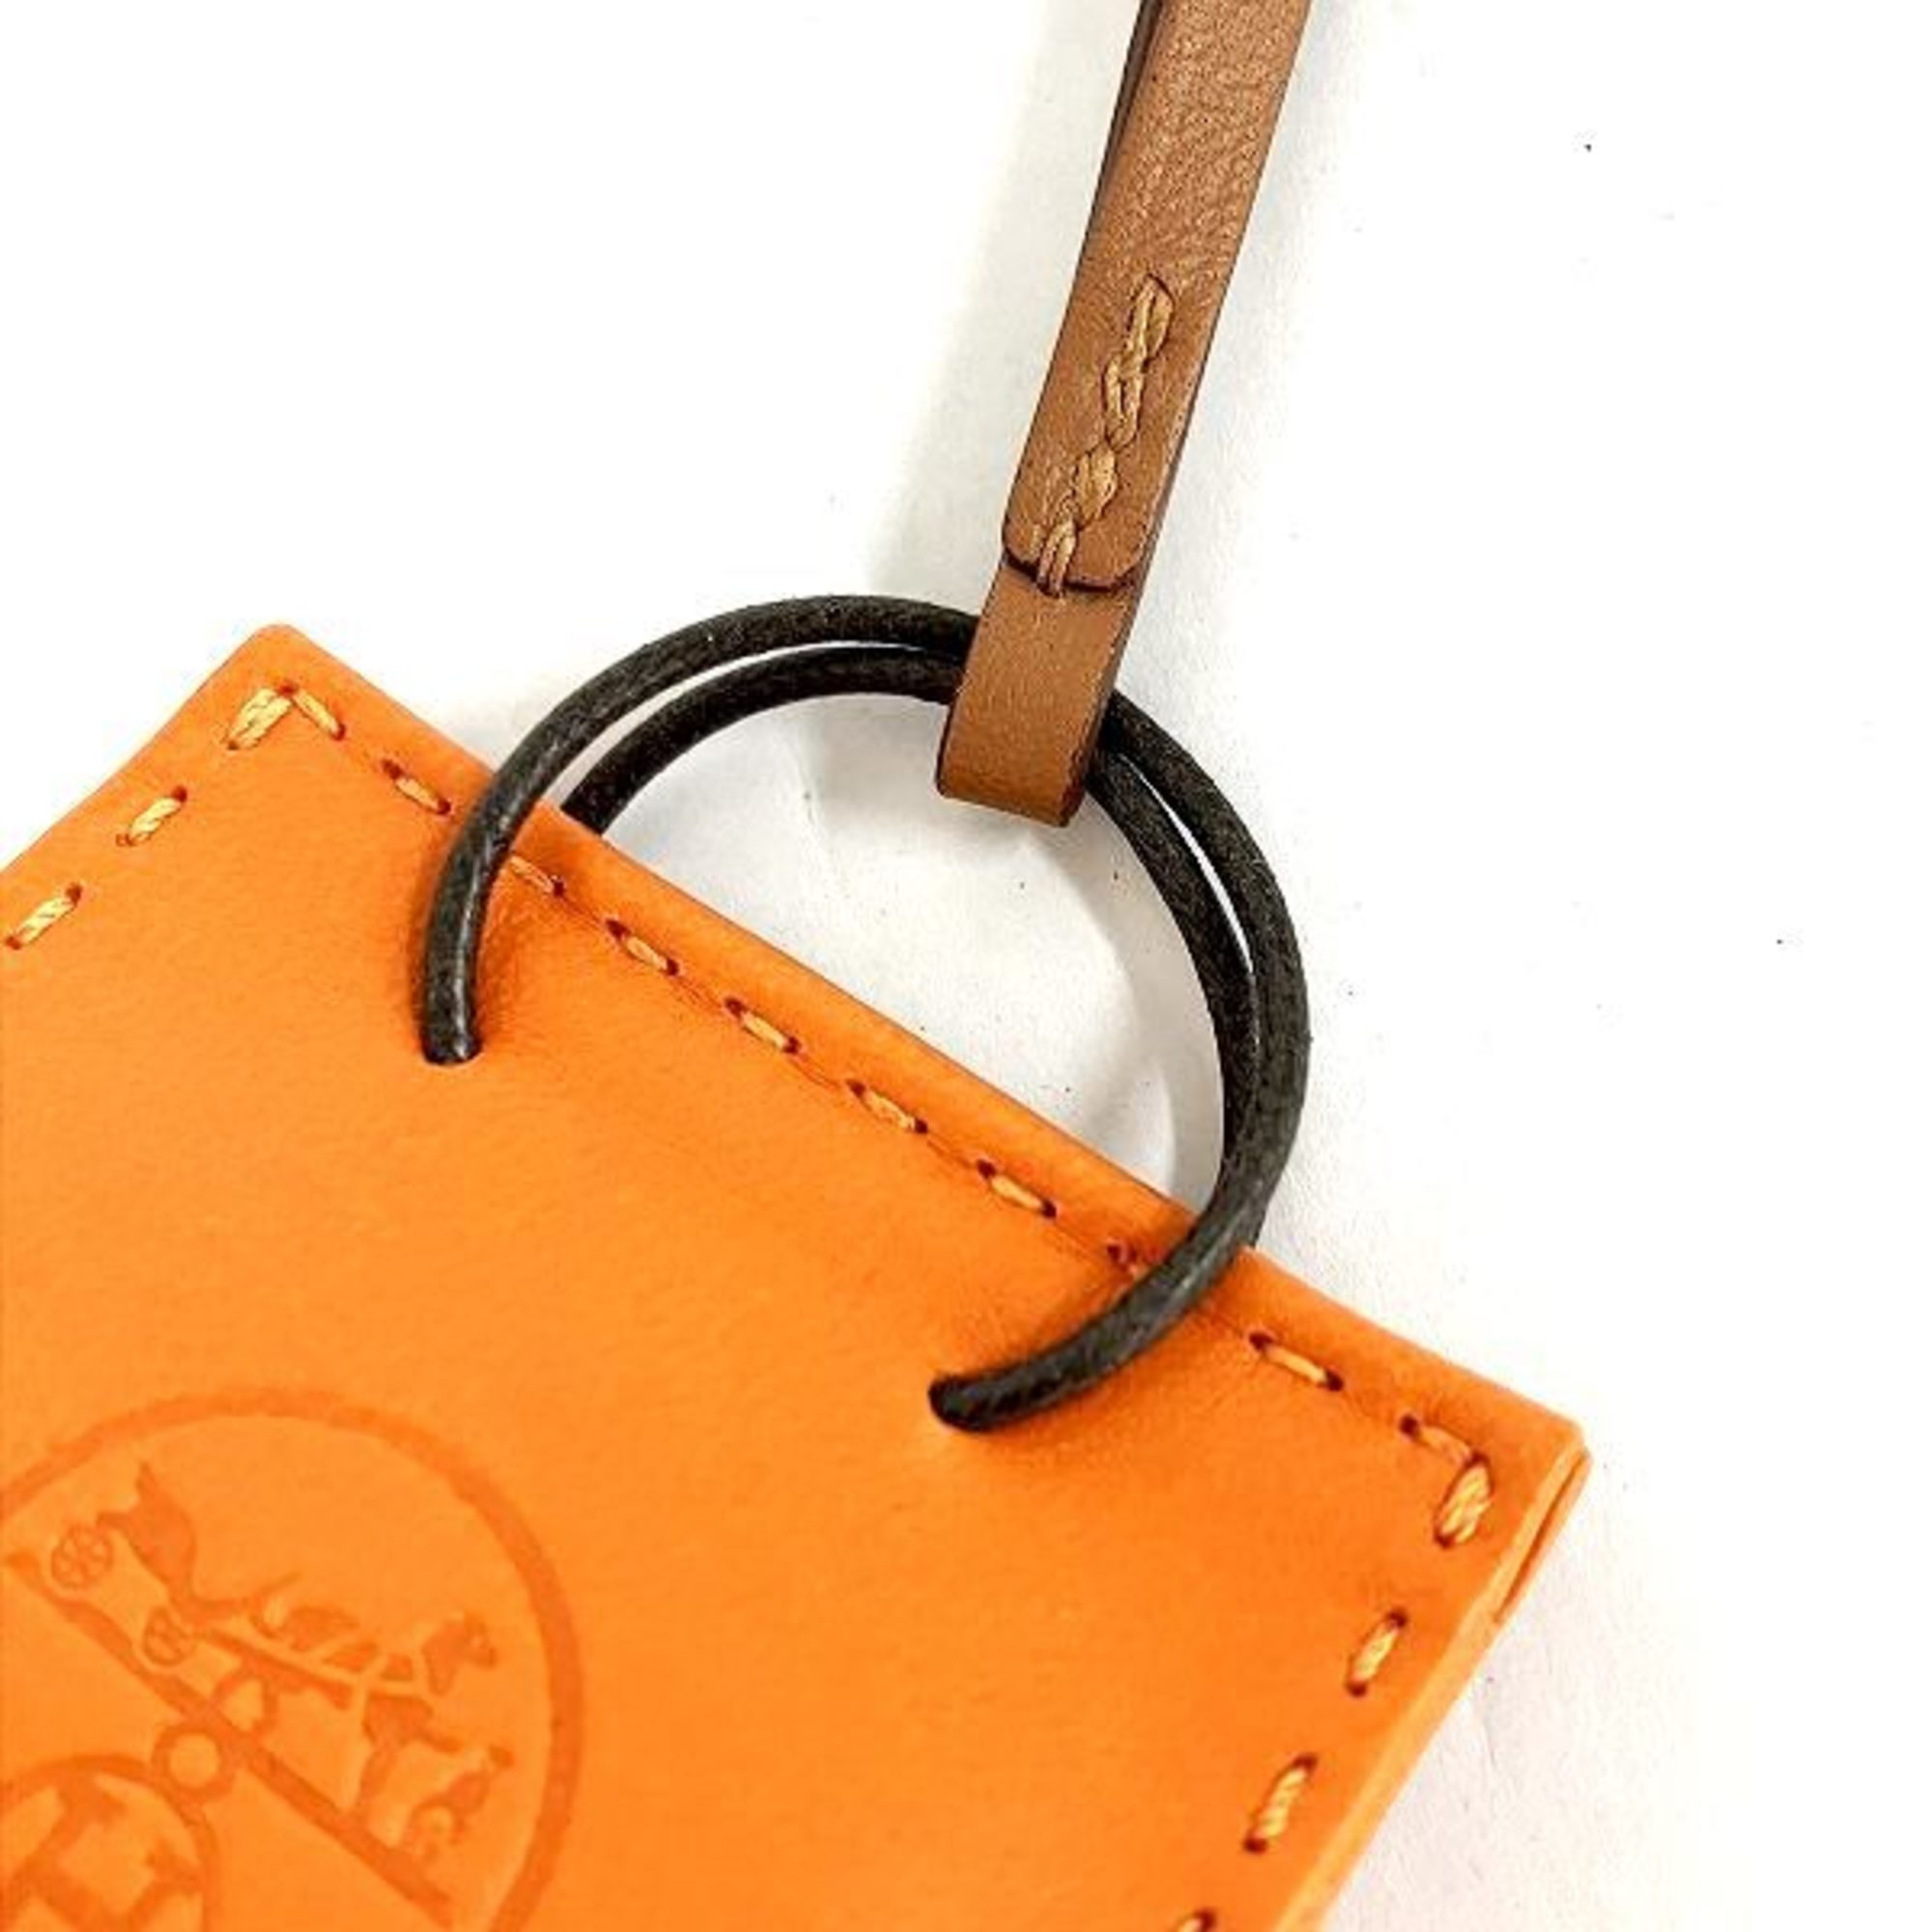 Hermes Sac Orange Shopper Type Charm Brand Accessories Bag Ladies